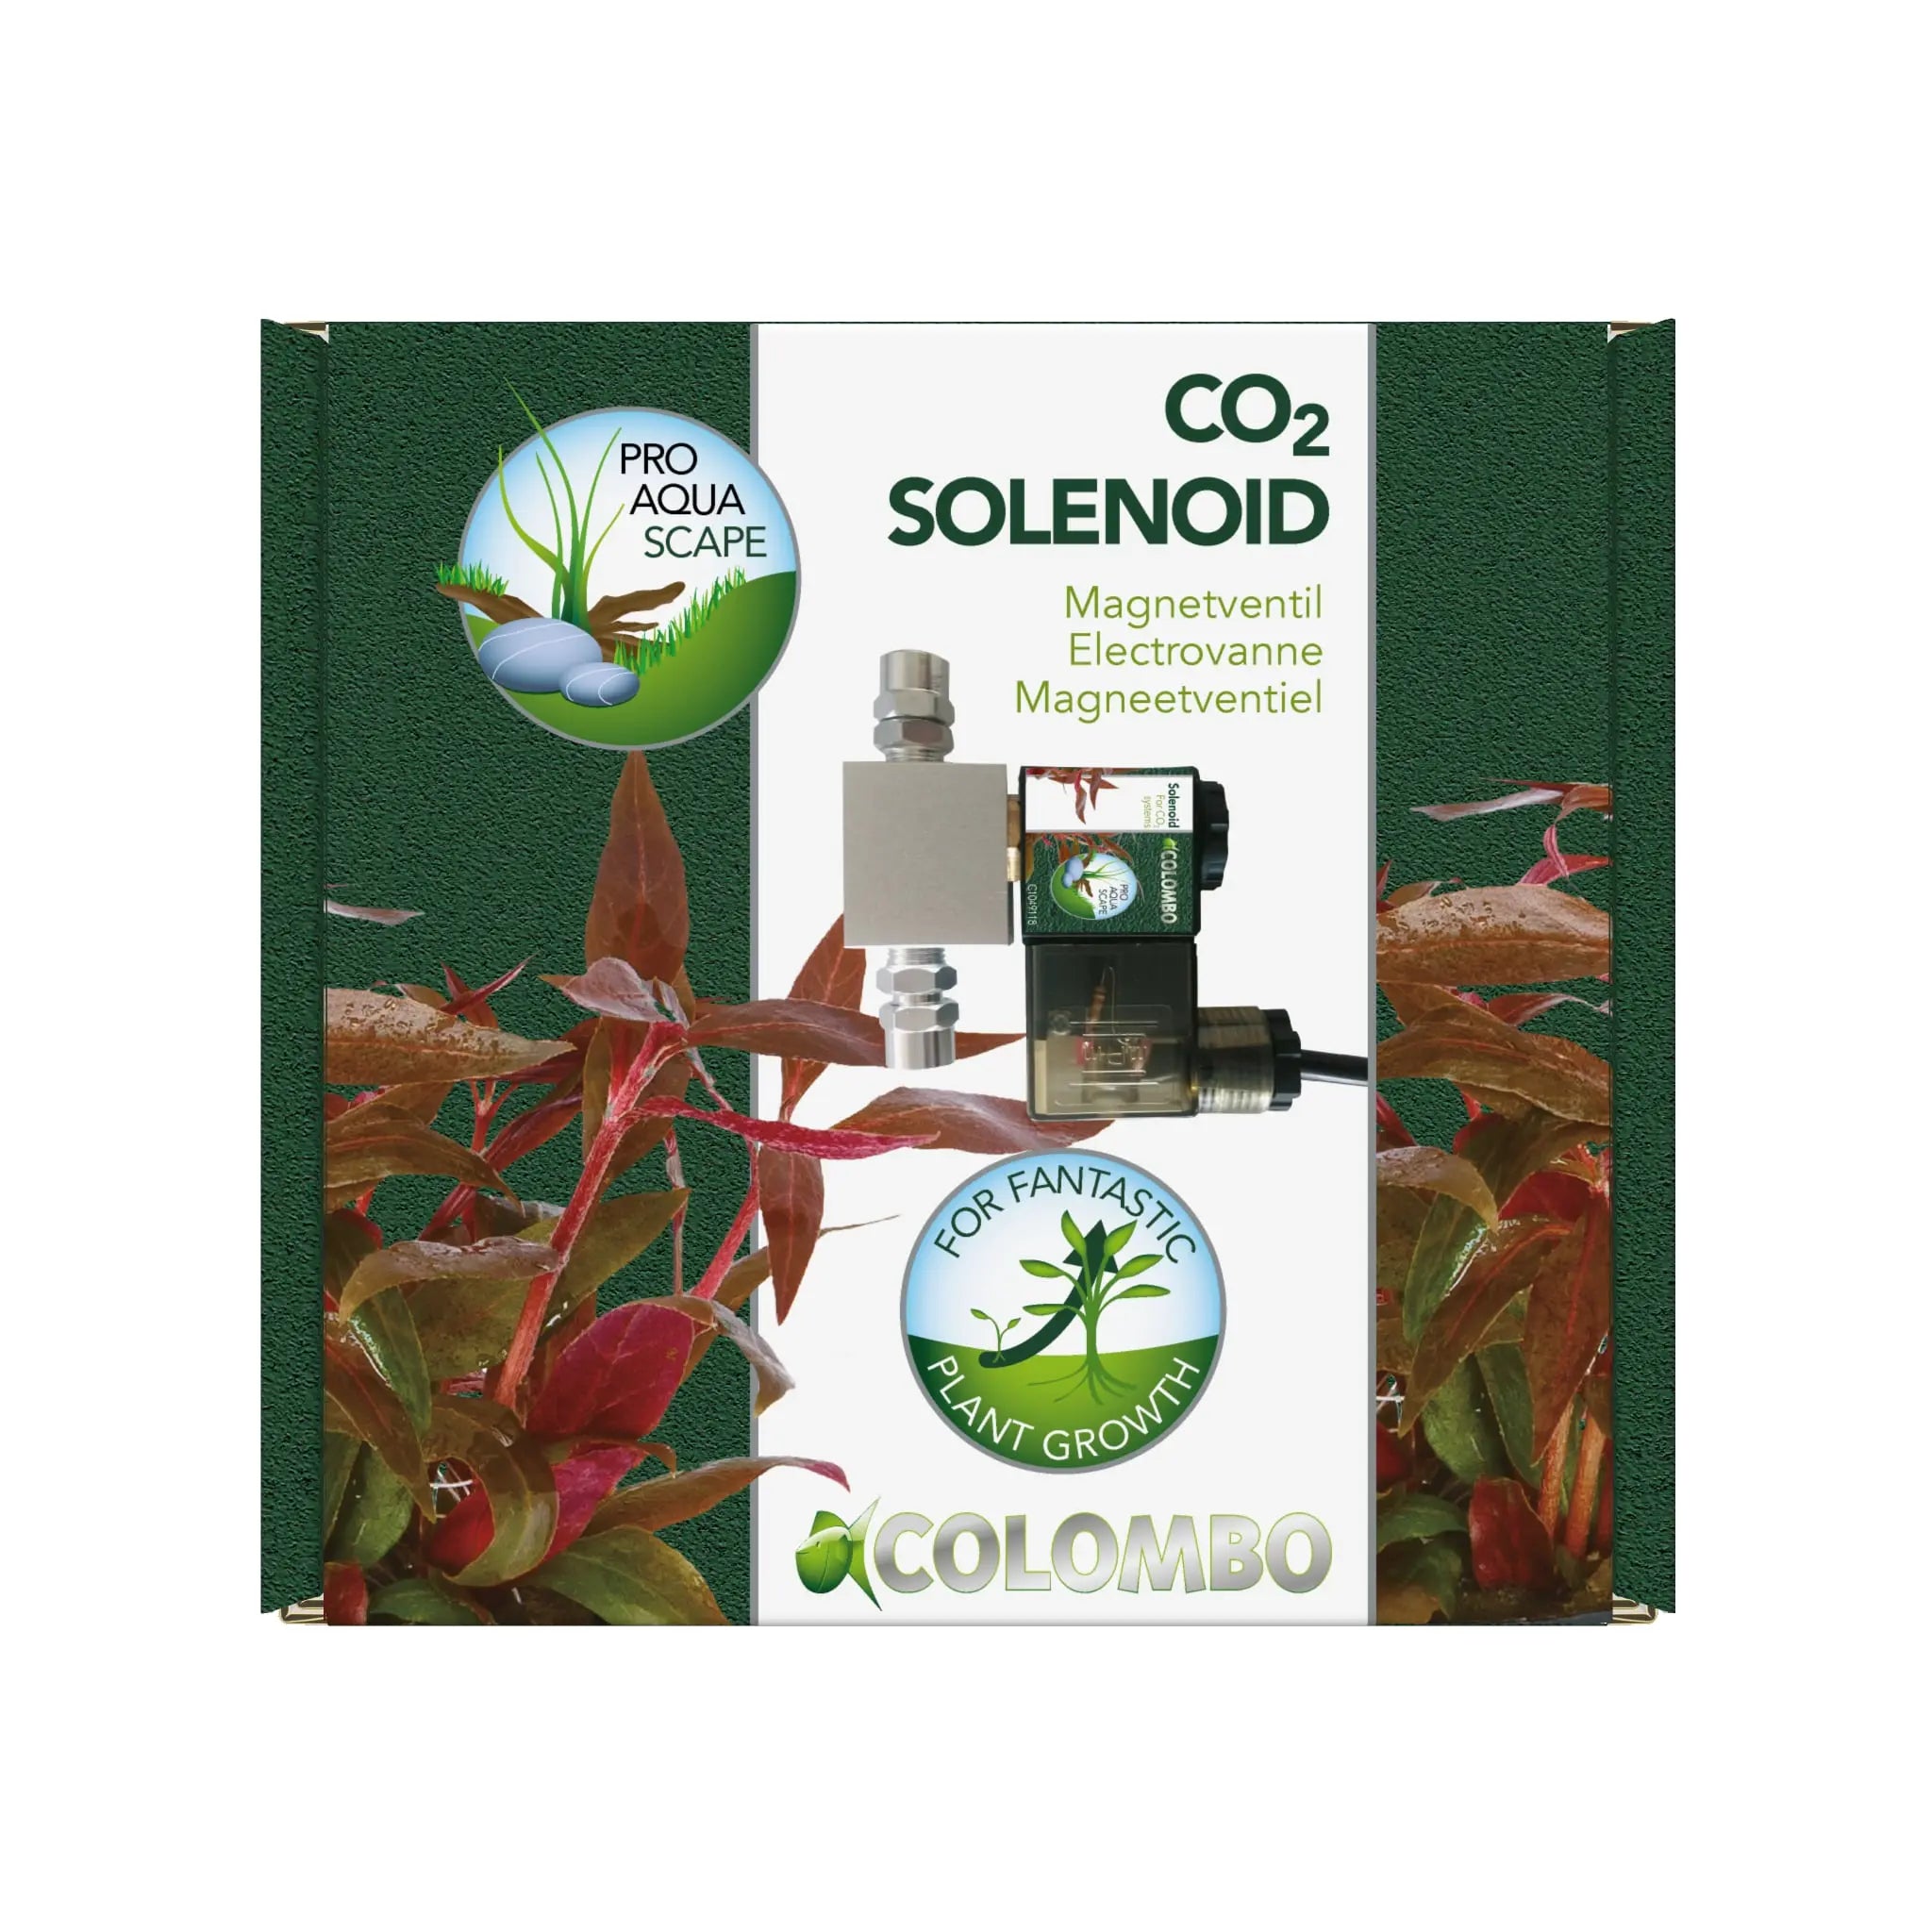 Colombo CO₂ Solenoid Colombo